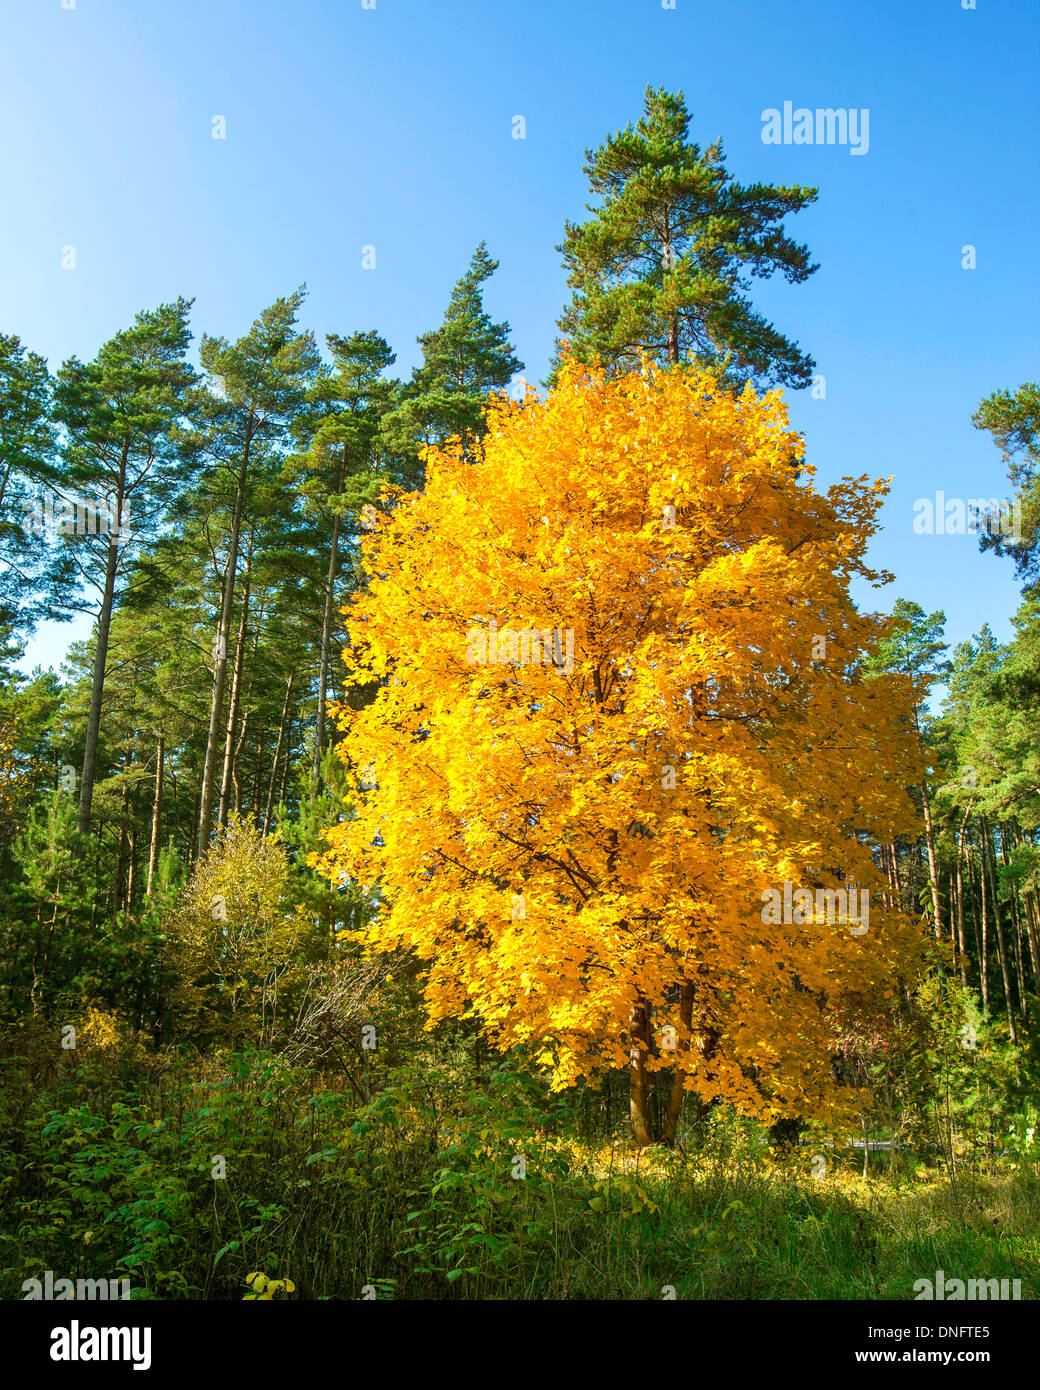 Single yellow tree, autumn background Stock Photo